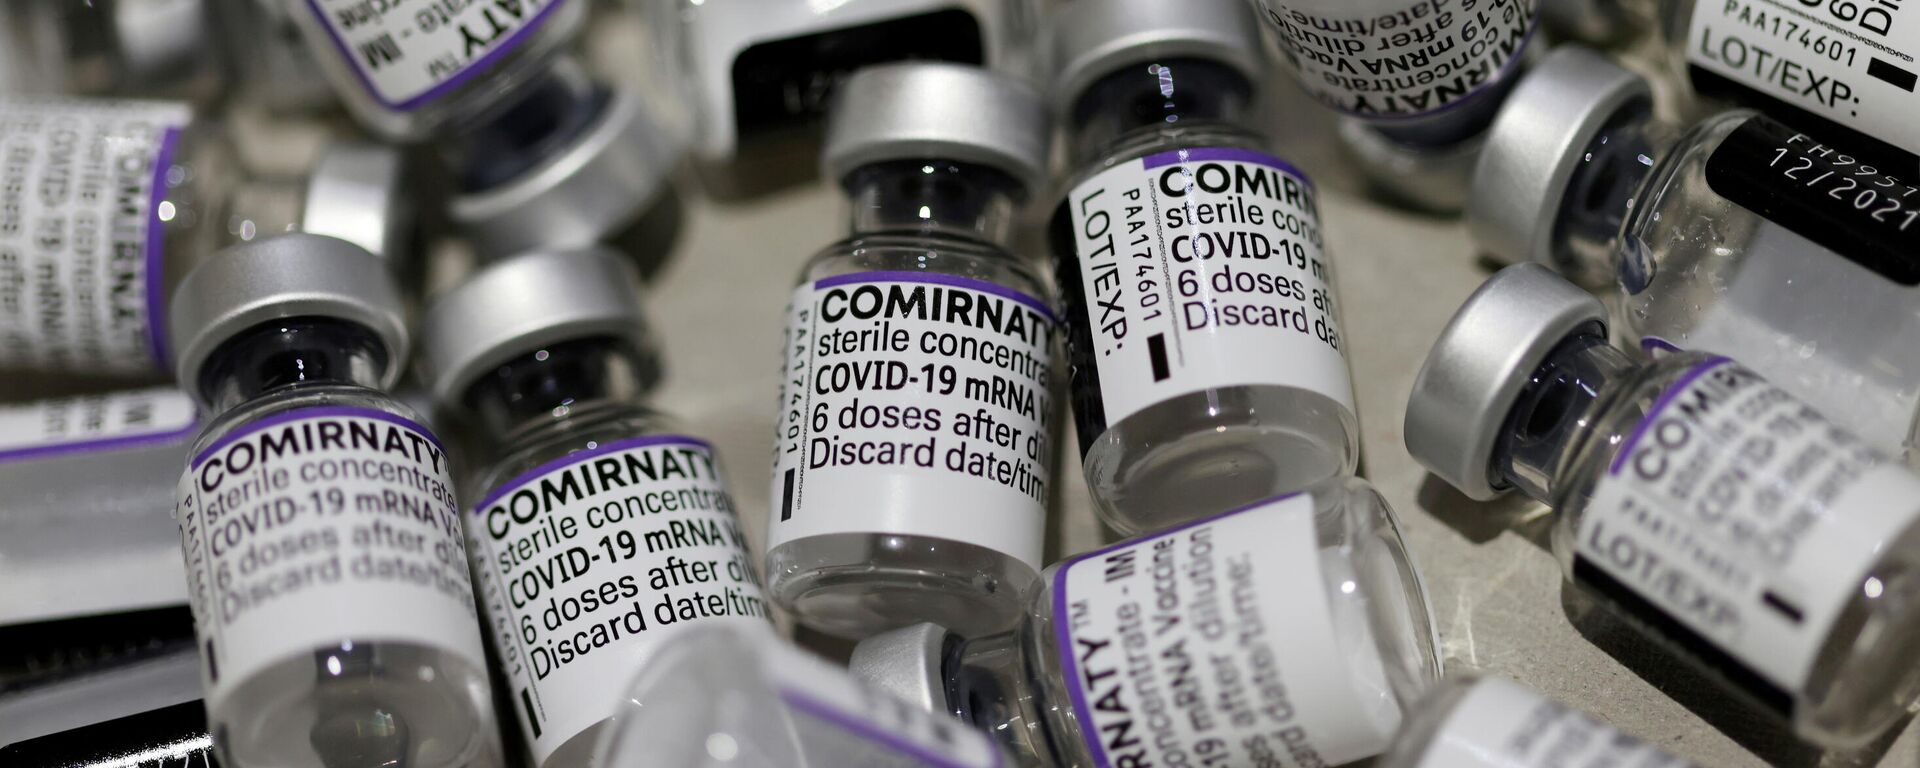 Empty vials of the Comirnaty Pfizer-BioNTech COVID-19 vaccine are seen at a coronavirus disease (COVID-19) vaccination center in Nice, France, November 23, 2021. - Sputnik International, 1920, 18.12.2021